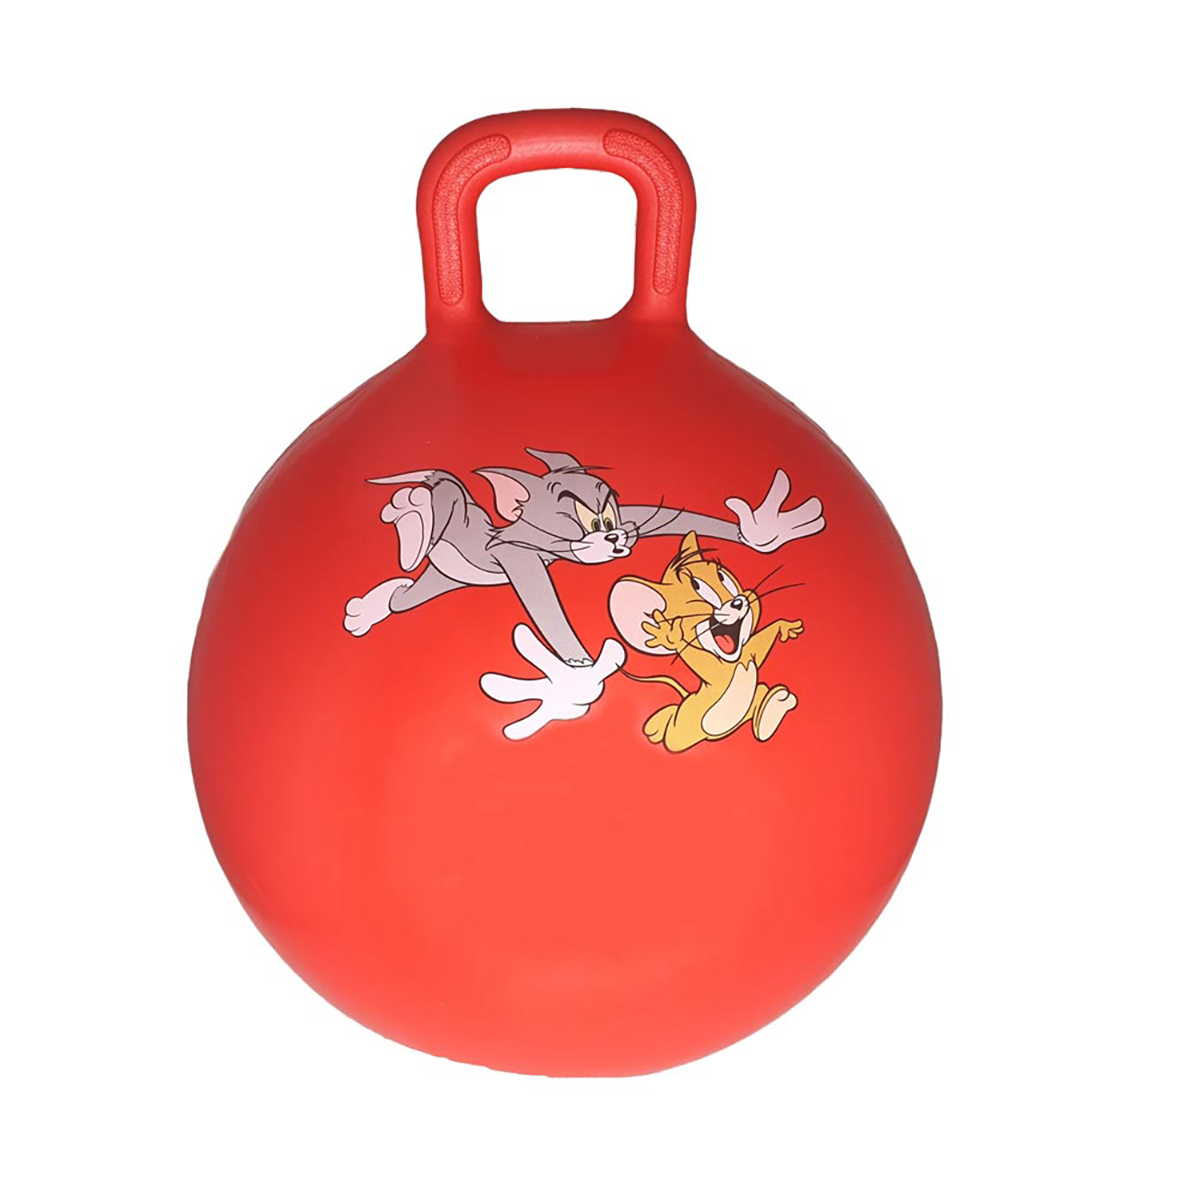 cm Hüpfball Tom Jerry, Spielset mehrfarbig 45 NOON und rot